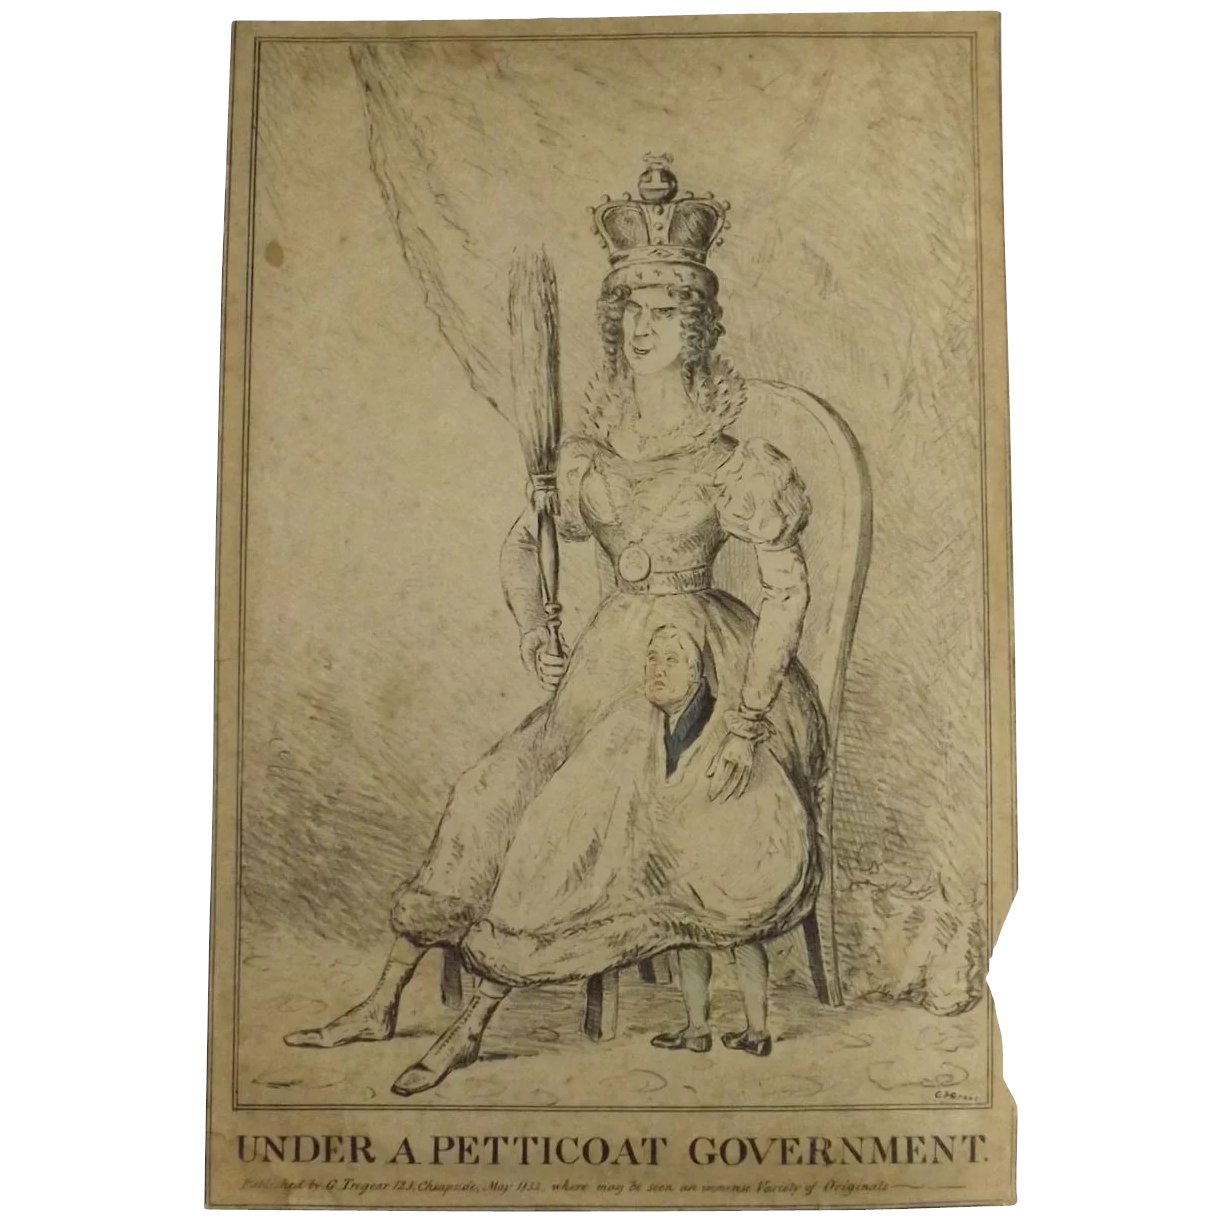 English Political Cartoon 1832 'Under A Petticoat Government'